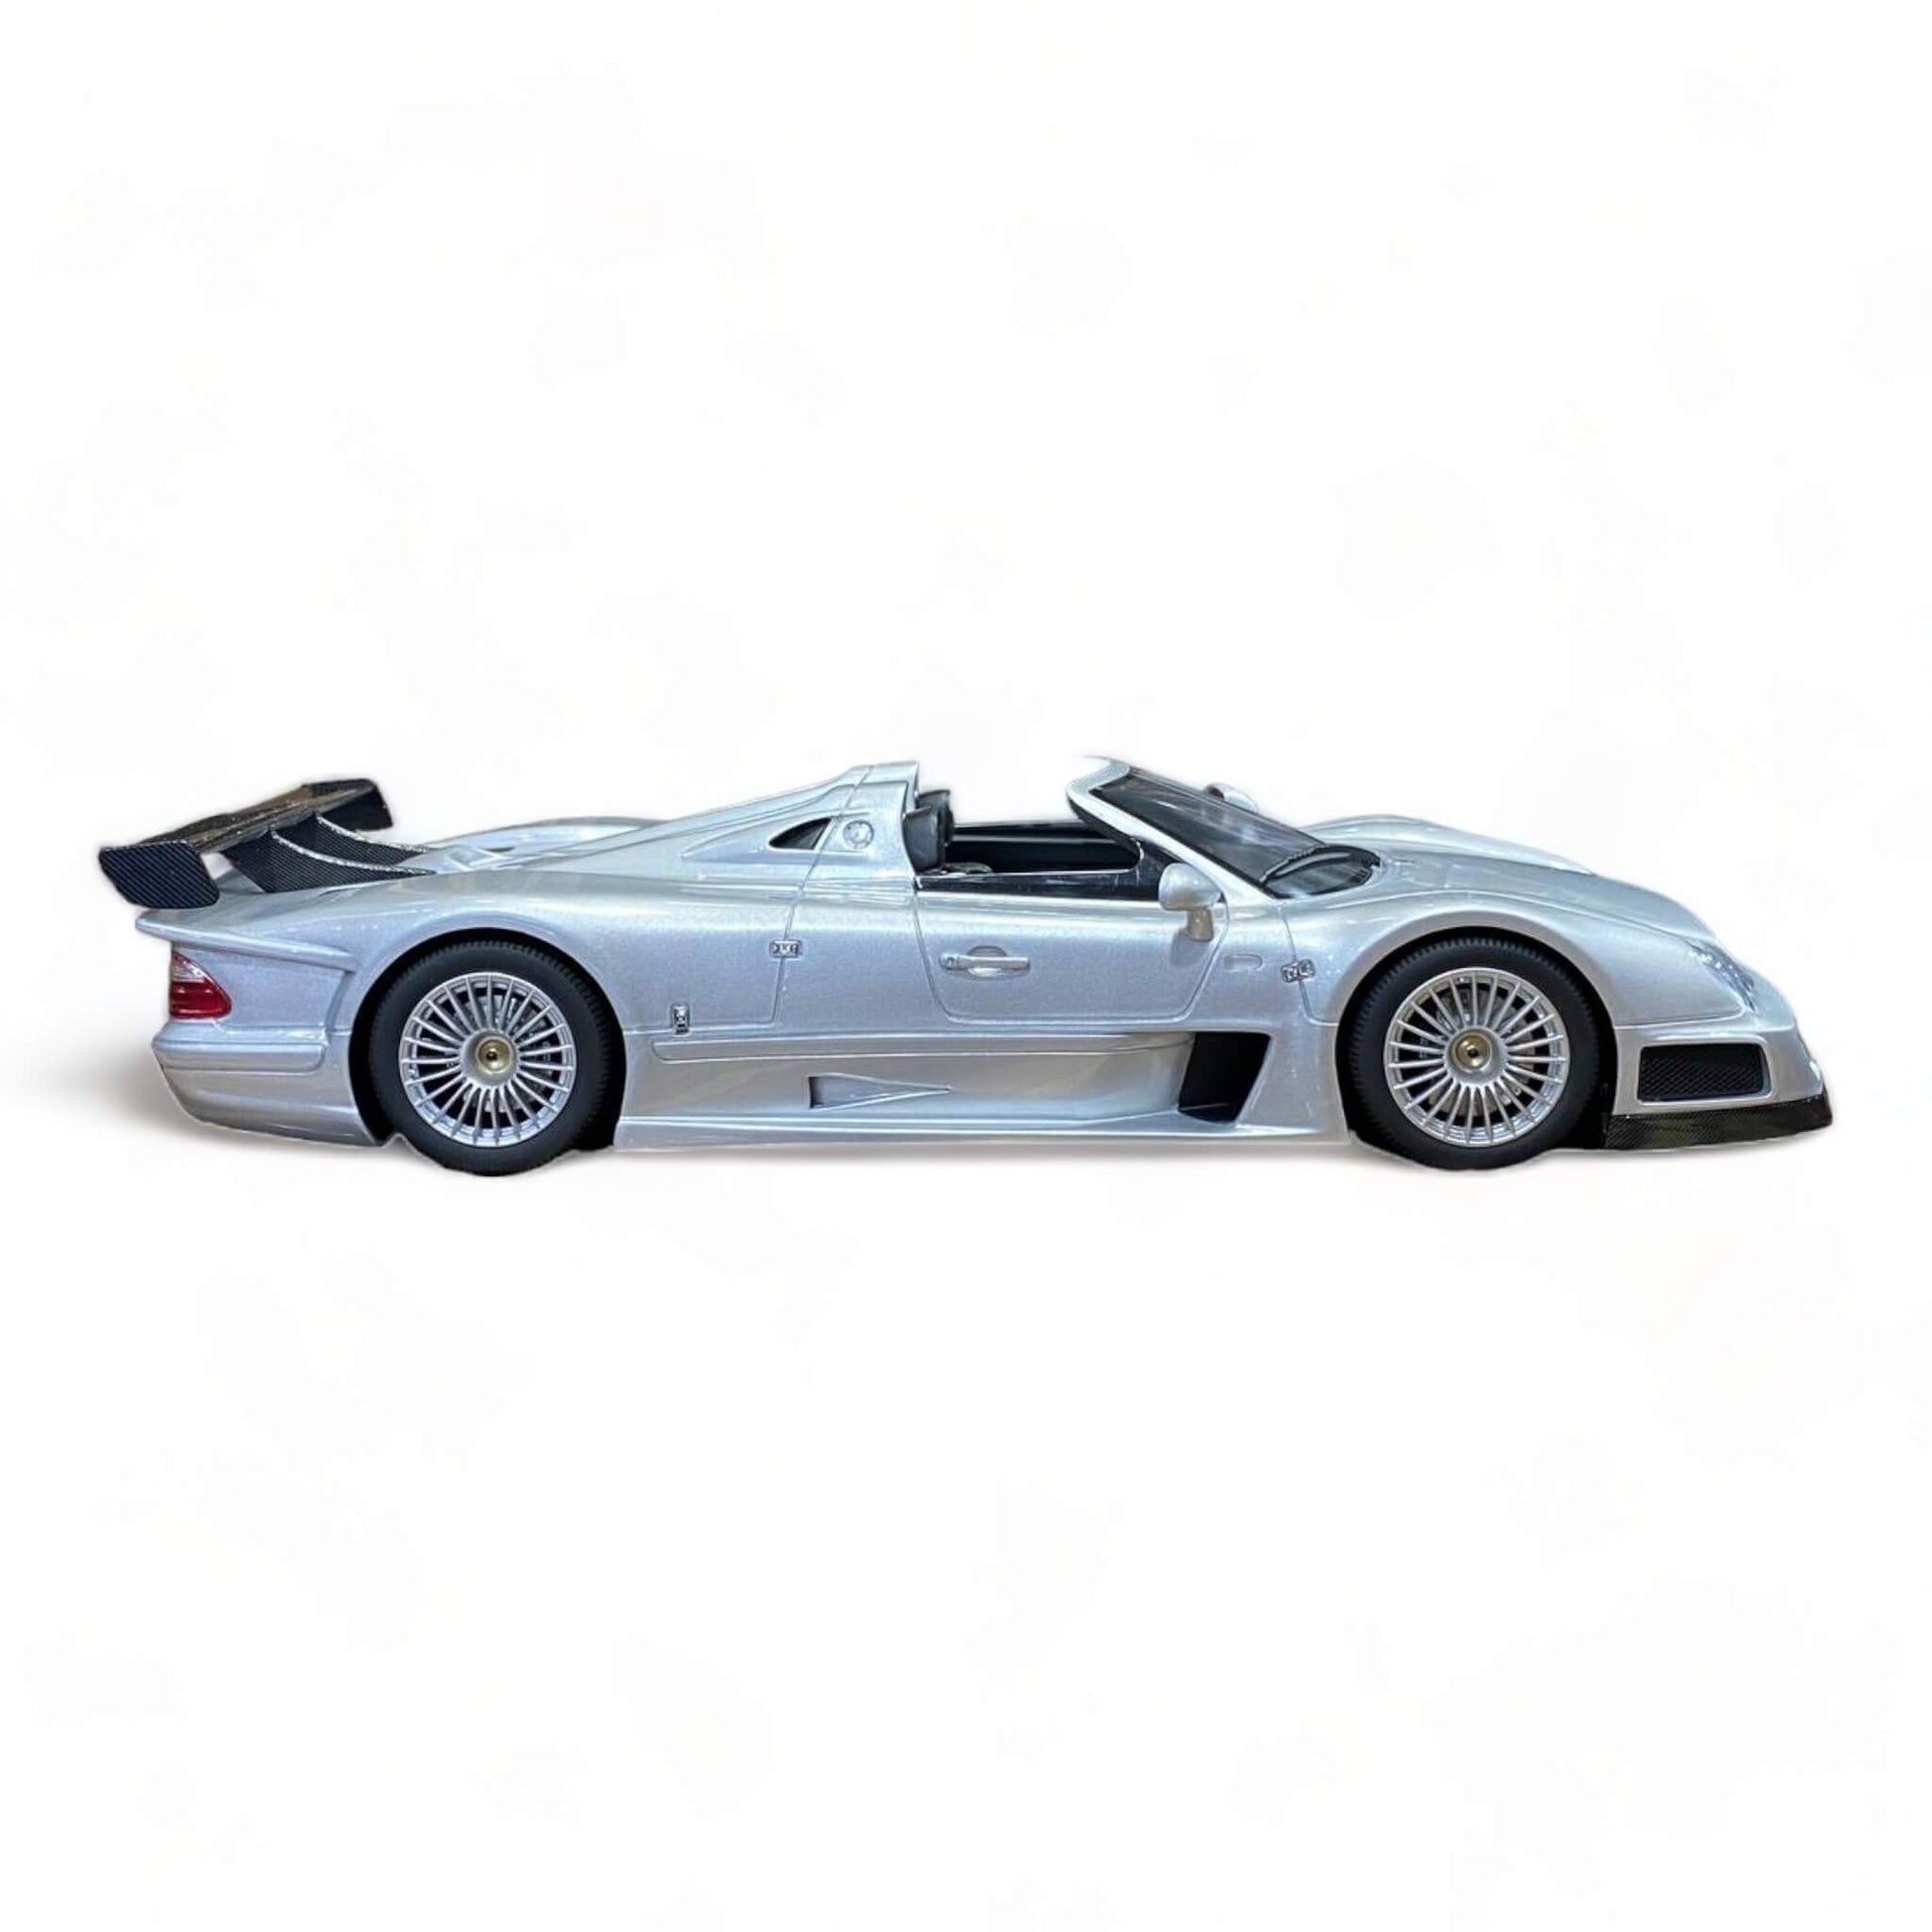 1/18 Diecast Mercedes Benz CLK-GTR Roadster Silver 1/18 by GT Spirit Scale Model Car|Sold in Dturman.com Dubai UAE.